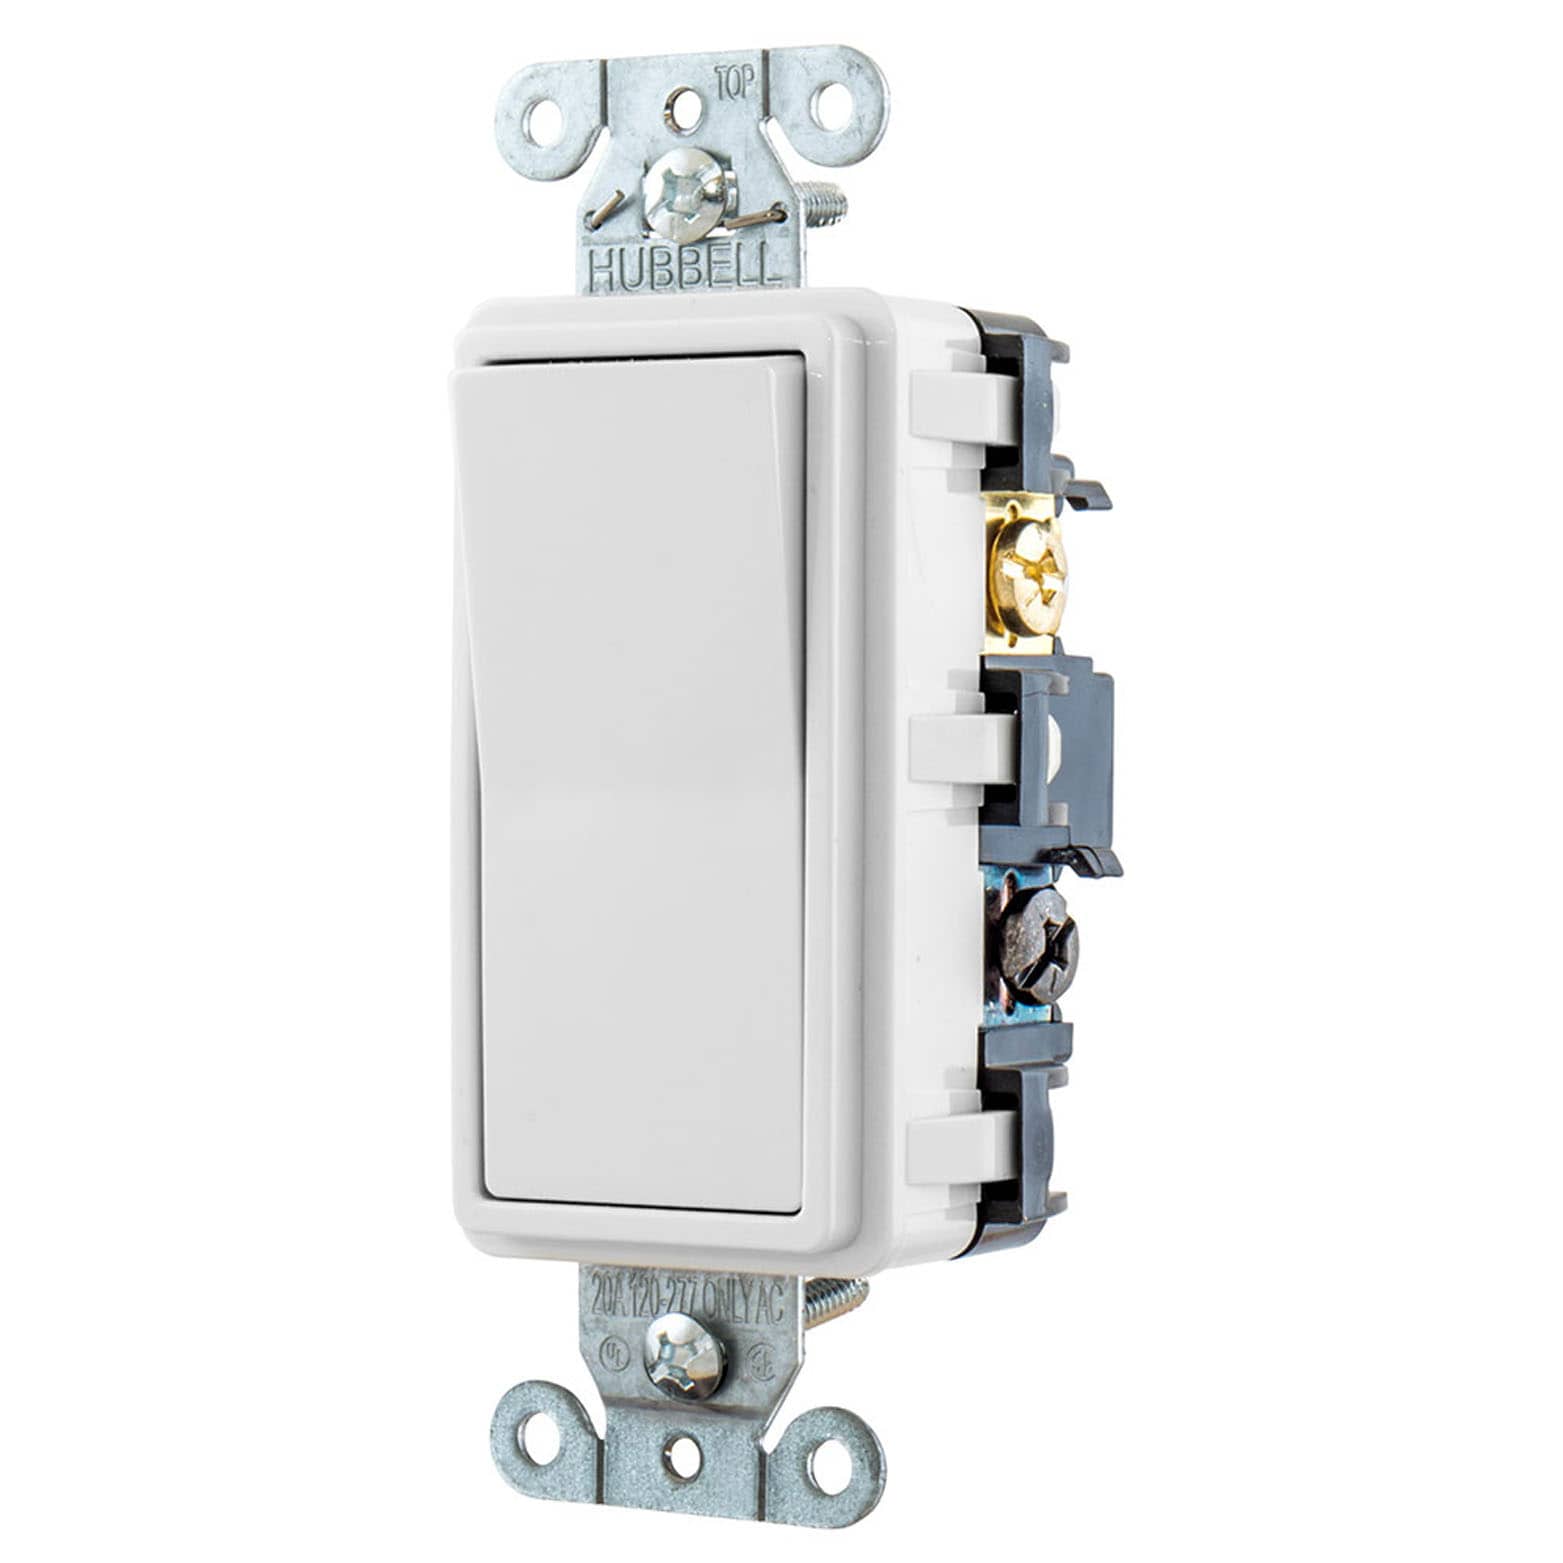 BRYANT 4904BW Wall Switch,White,4-Way Switch,1 to 2 HP 